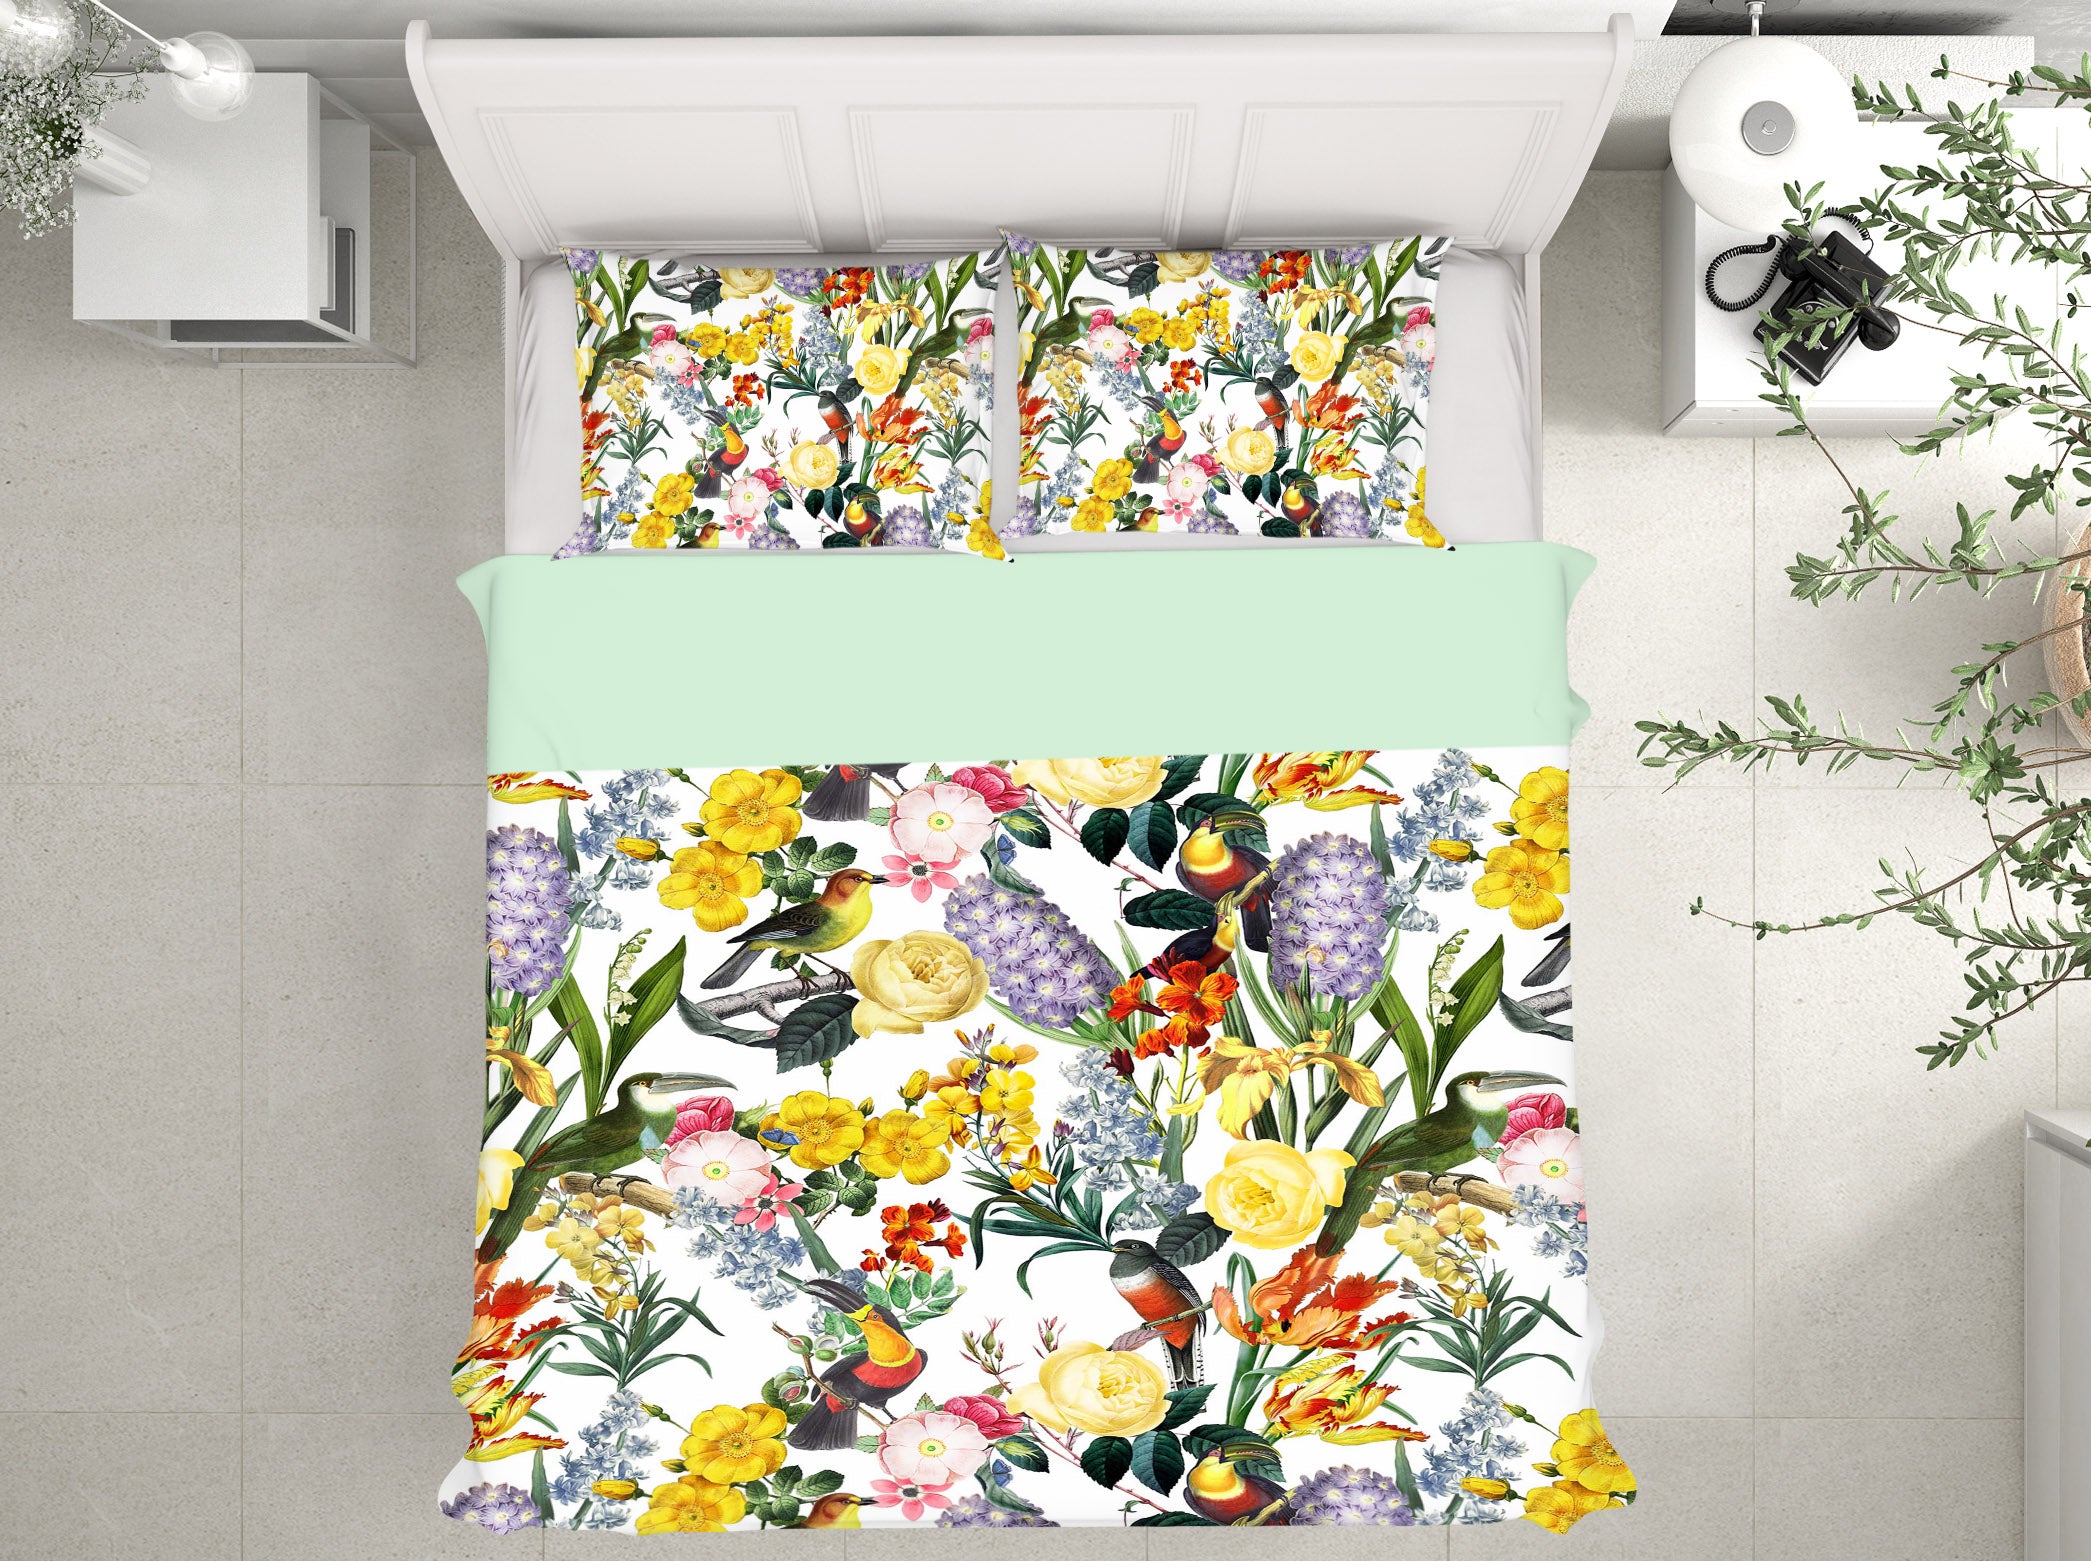 3D Fragrant Colored Flowers 146 Uta Naumann Bedding Bed Pillowcases Quilt